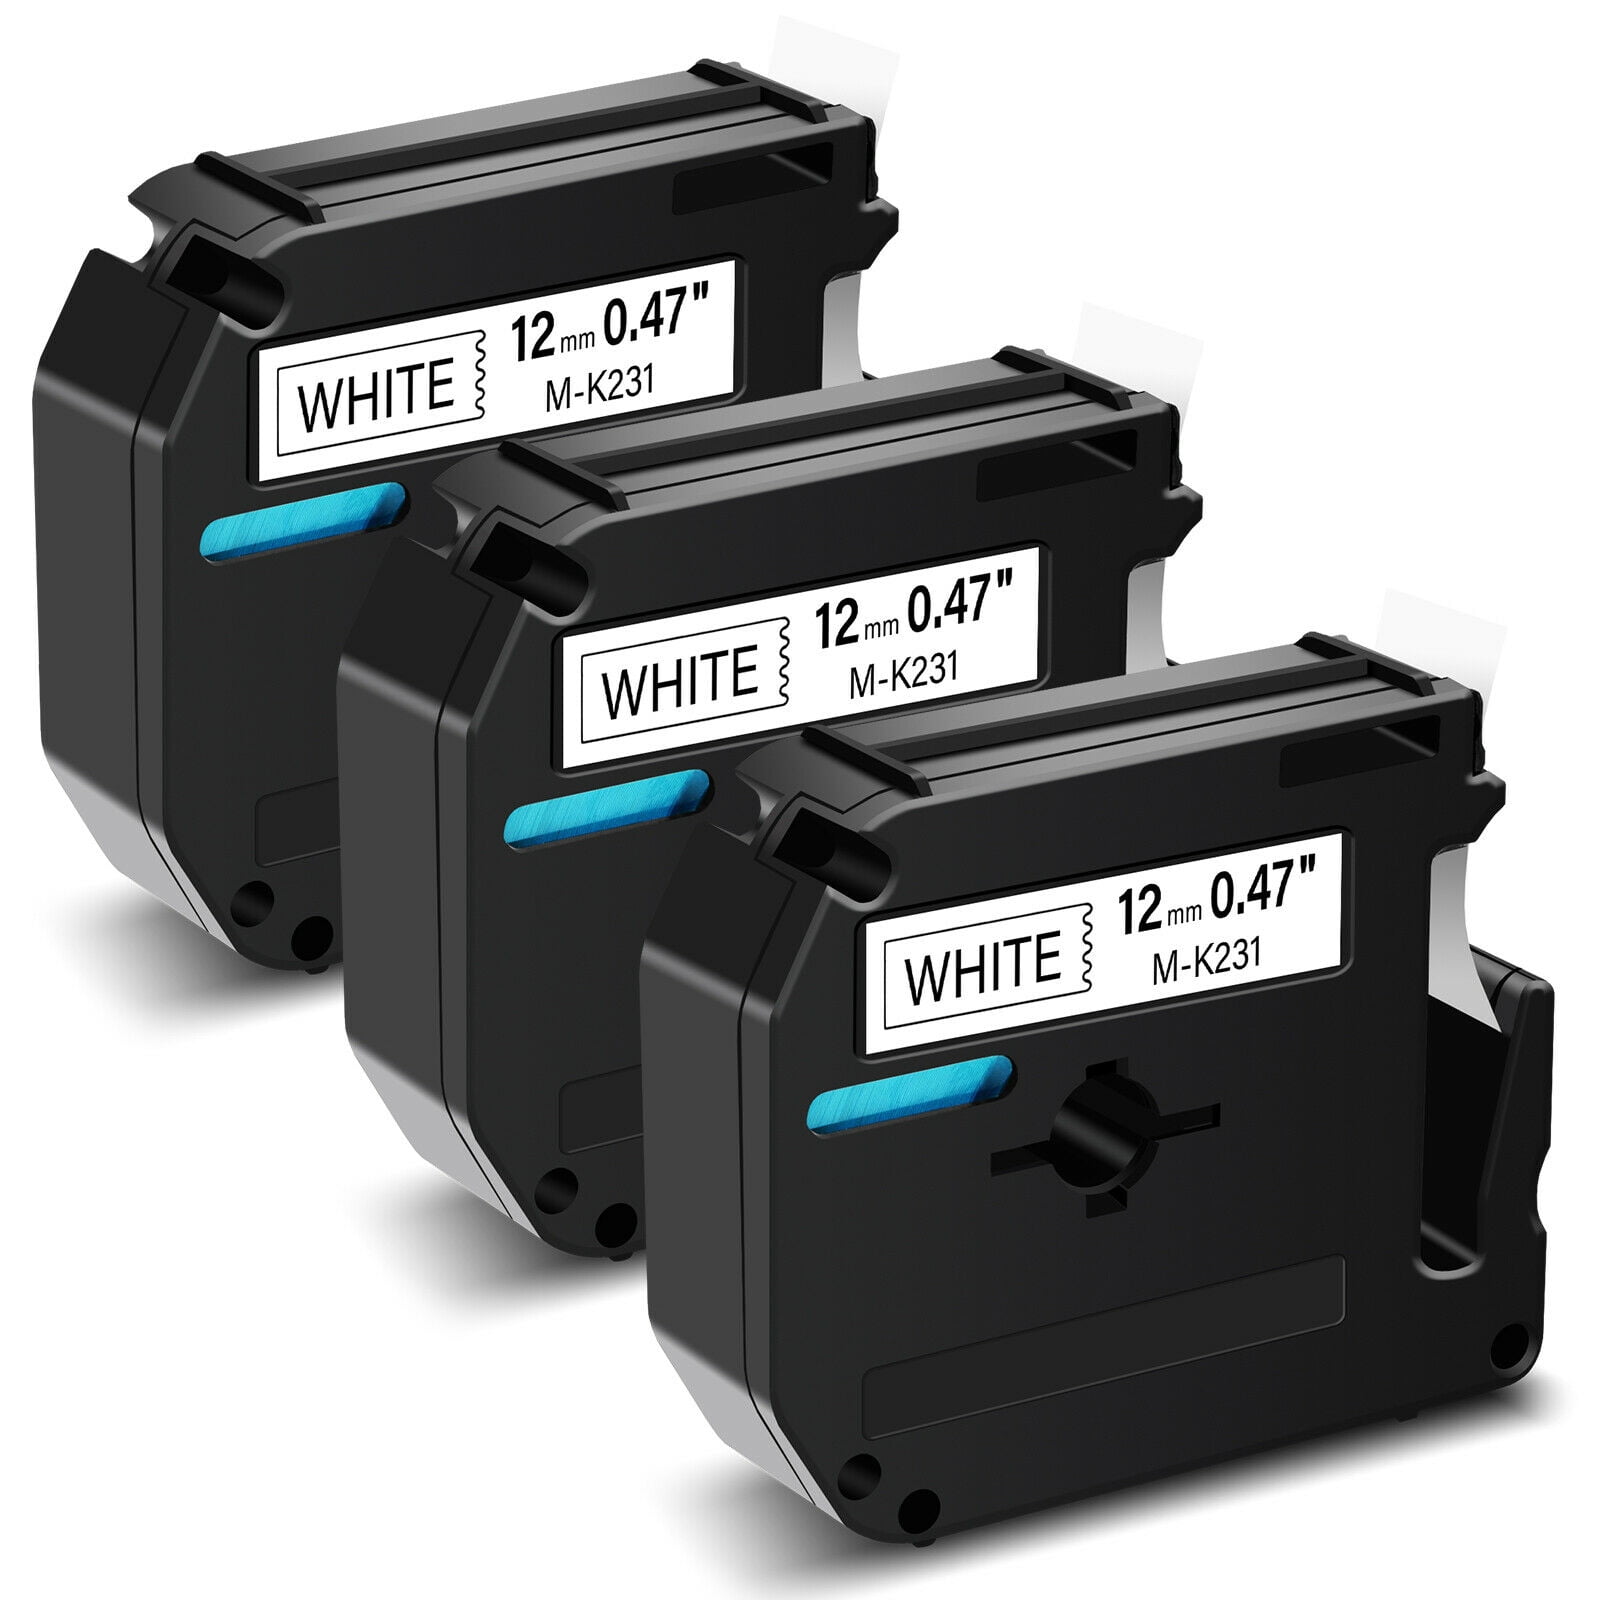 5PK M-K221 MK221 Black On White Label Tape For Brother P-touch PT-80 Printer 